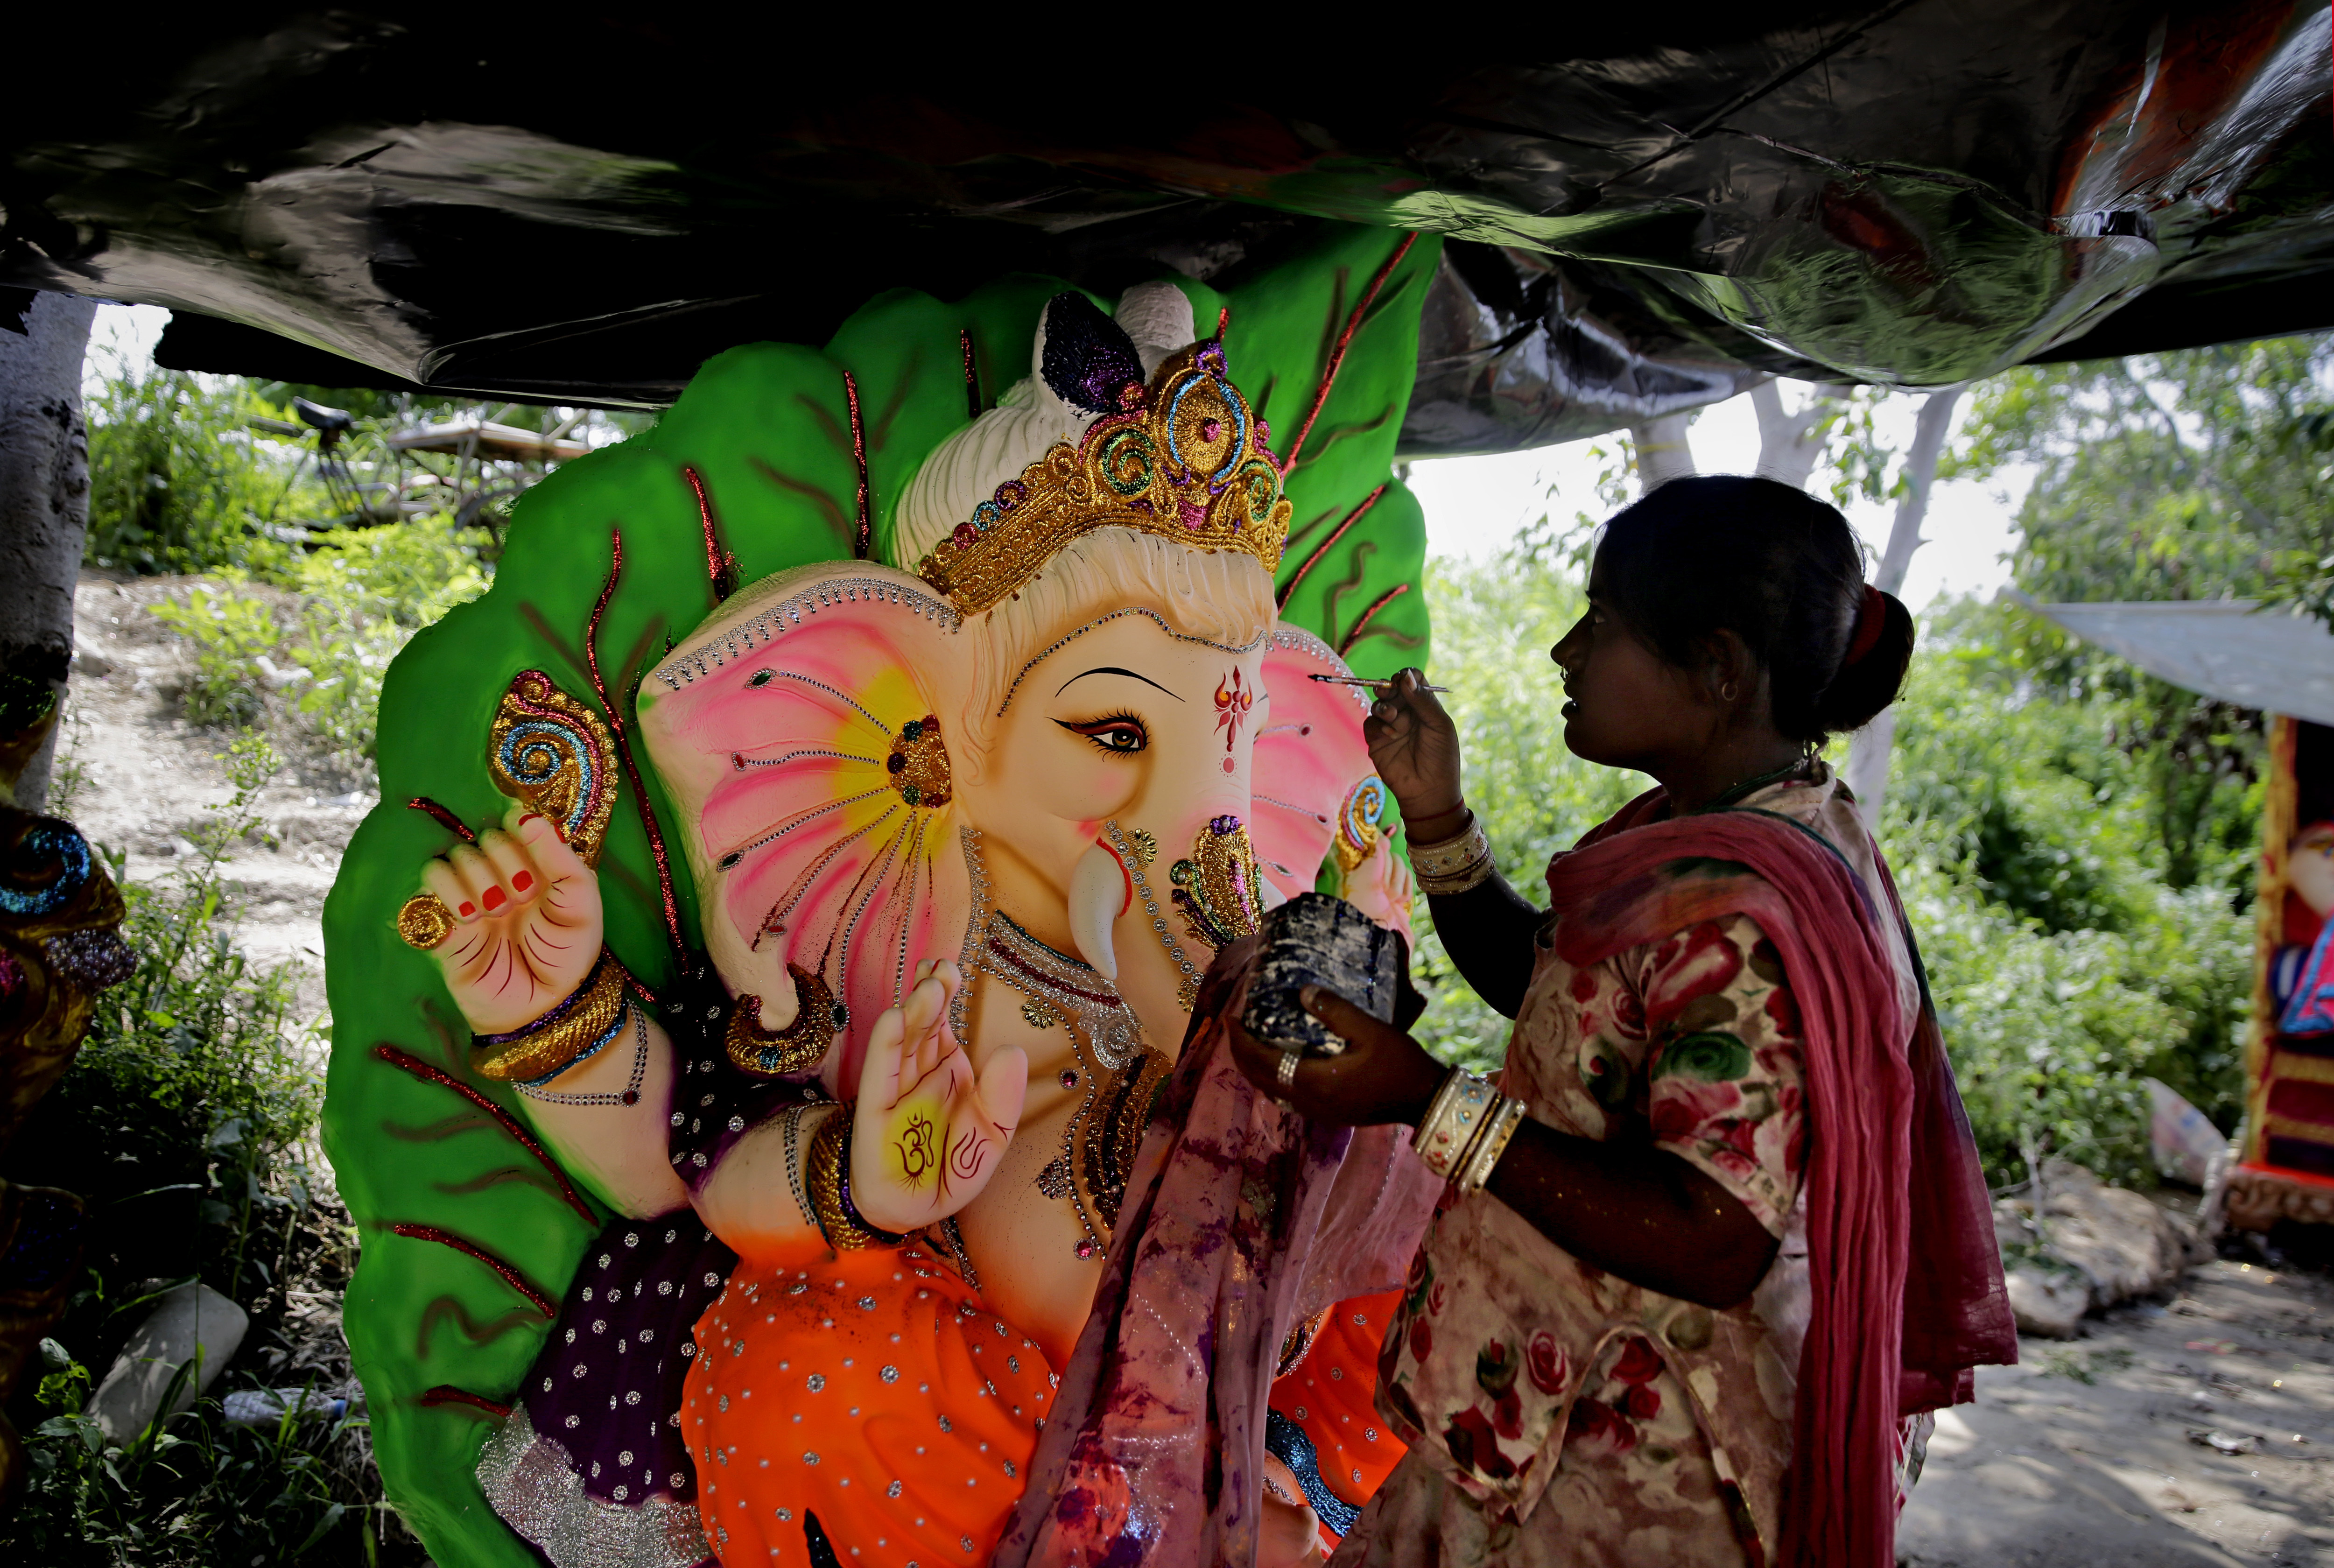 An Indian artist prepares an idol of Hindu god Ganesha in New Delhi, India, Wednesday, Sept. 12, 2018. The idols are being prepared ahead of the 'Ganesh Chaturthi' festival that celebrates the birthday of the elephant headed god. (AP Photo/Altaf Qadri)